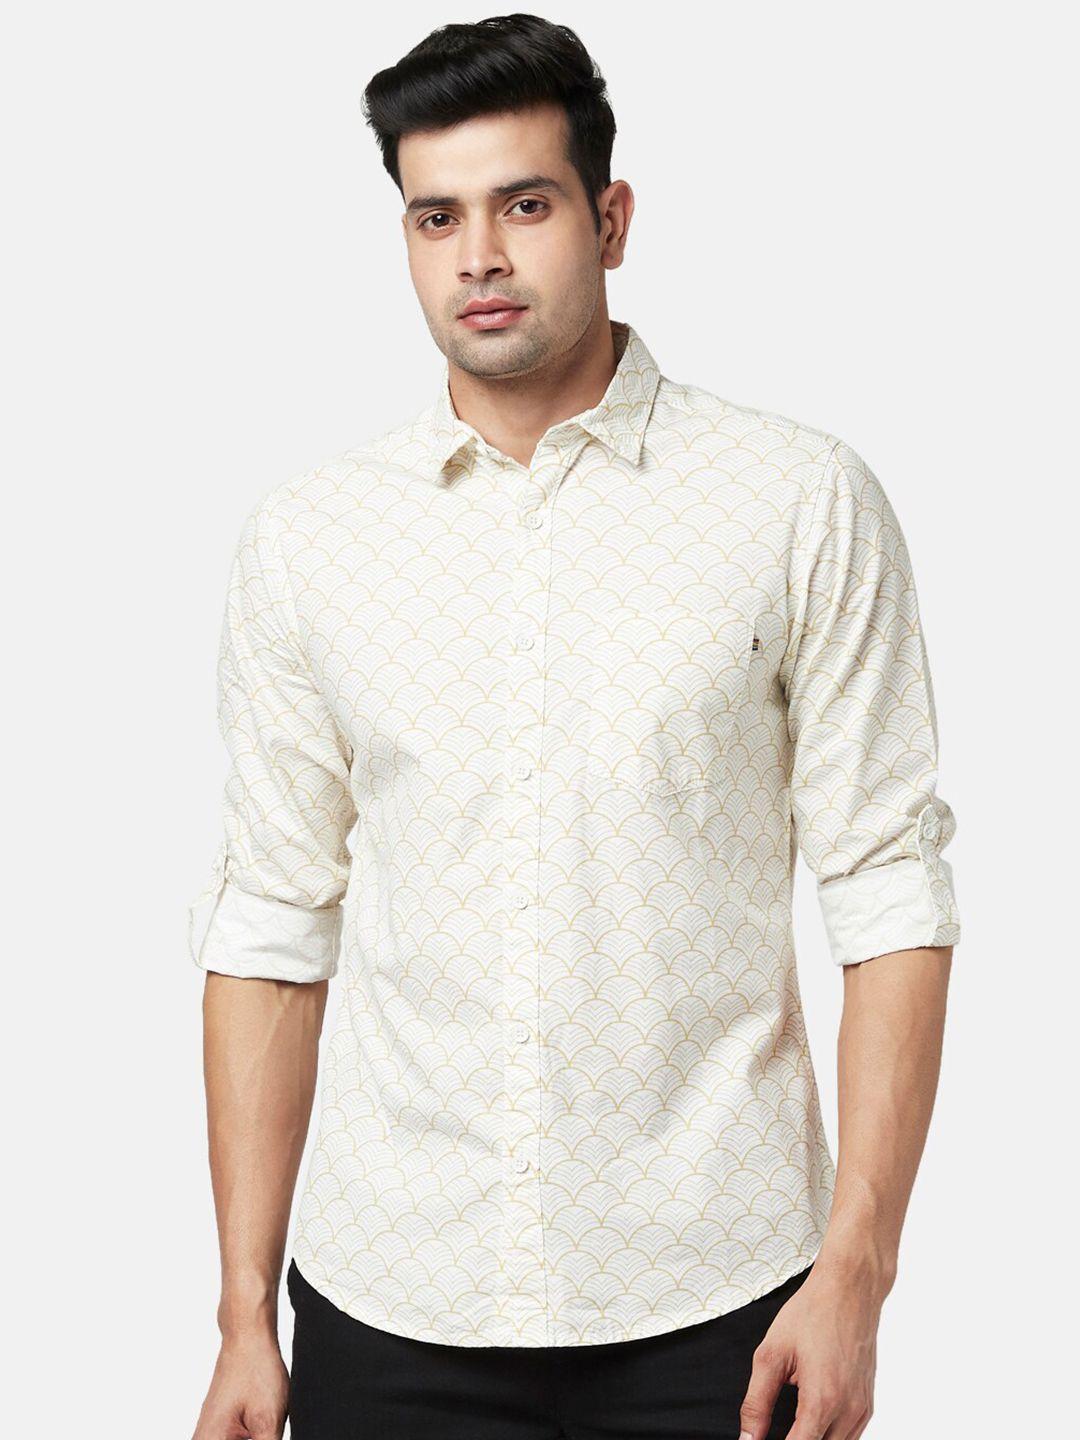 urban ranger by pantaloons men off white slim fit printed cotton casual shirt